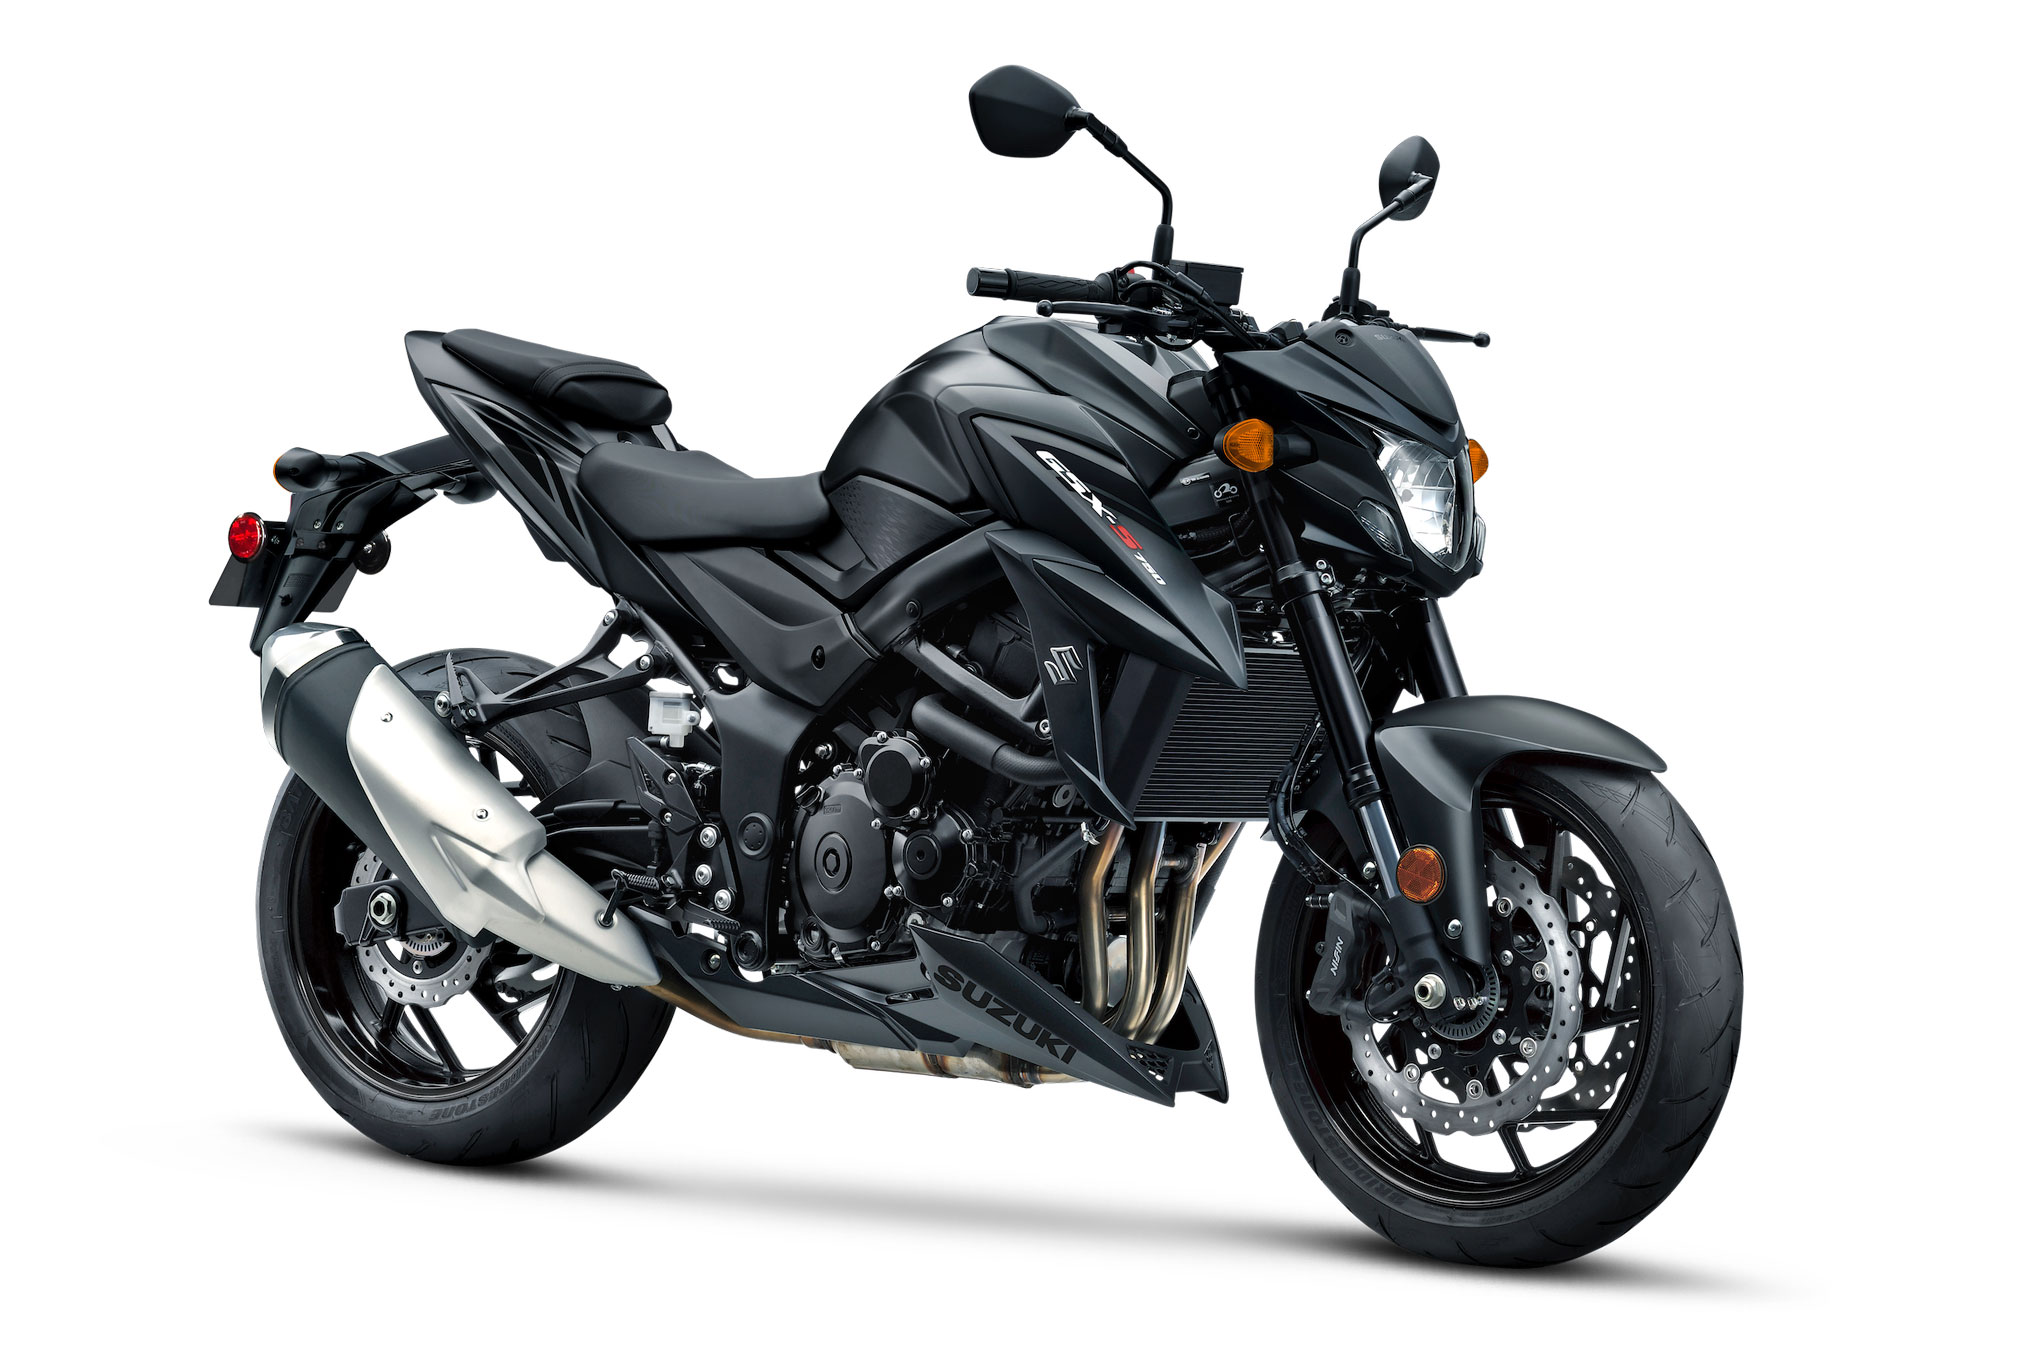 2020 Suzuki GSX-S750 Guide • Total Motorcycle